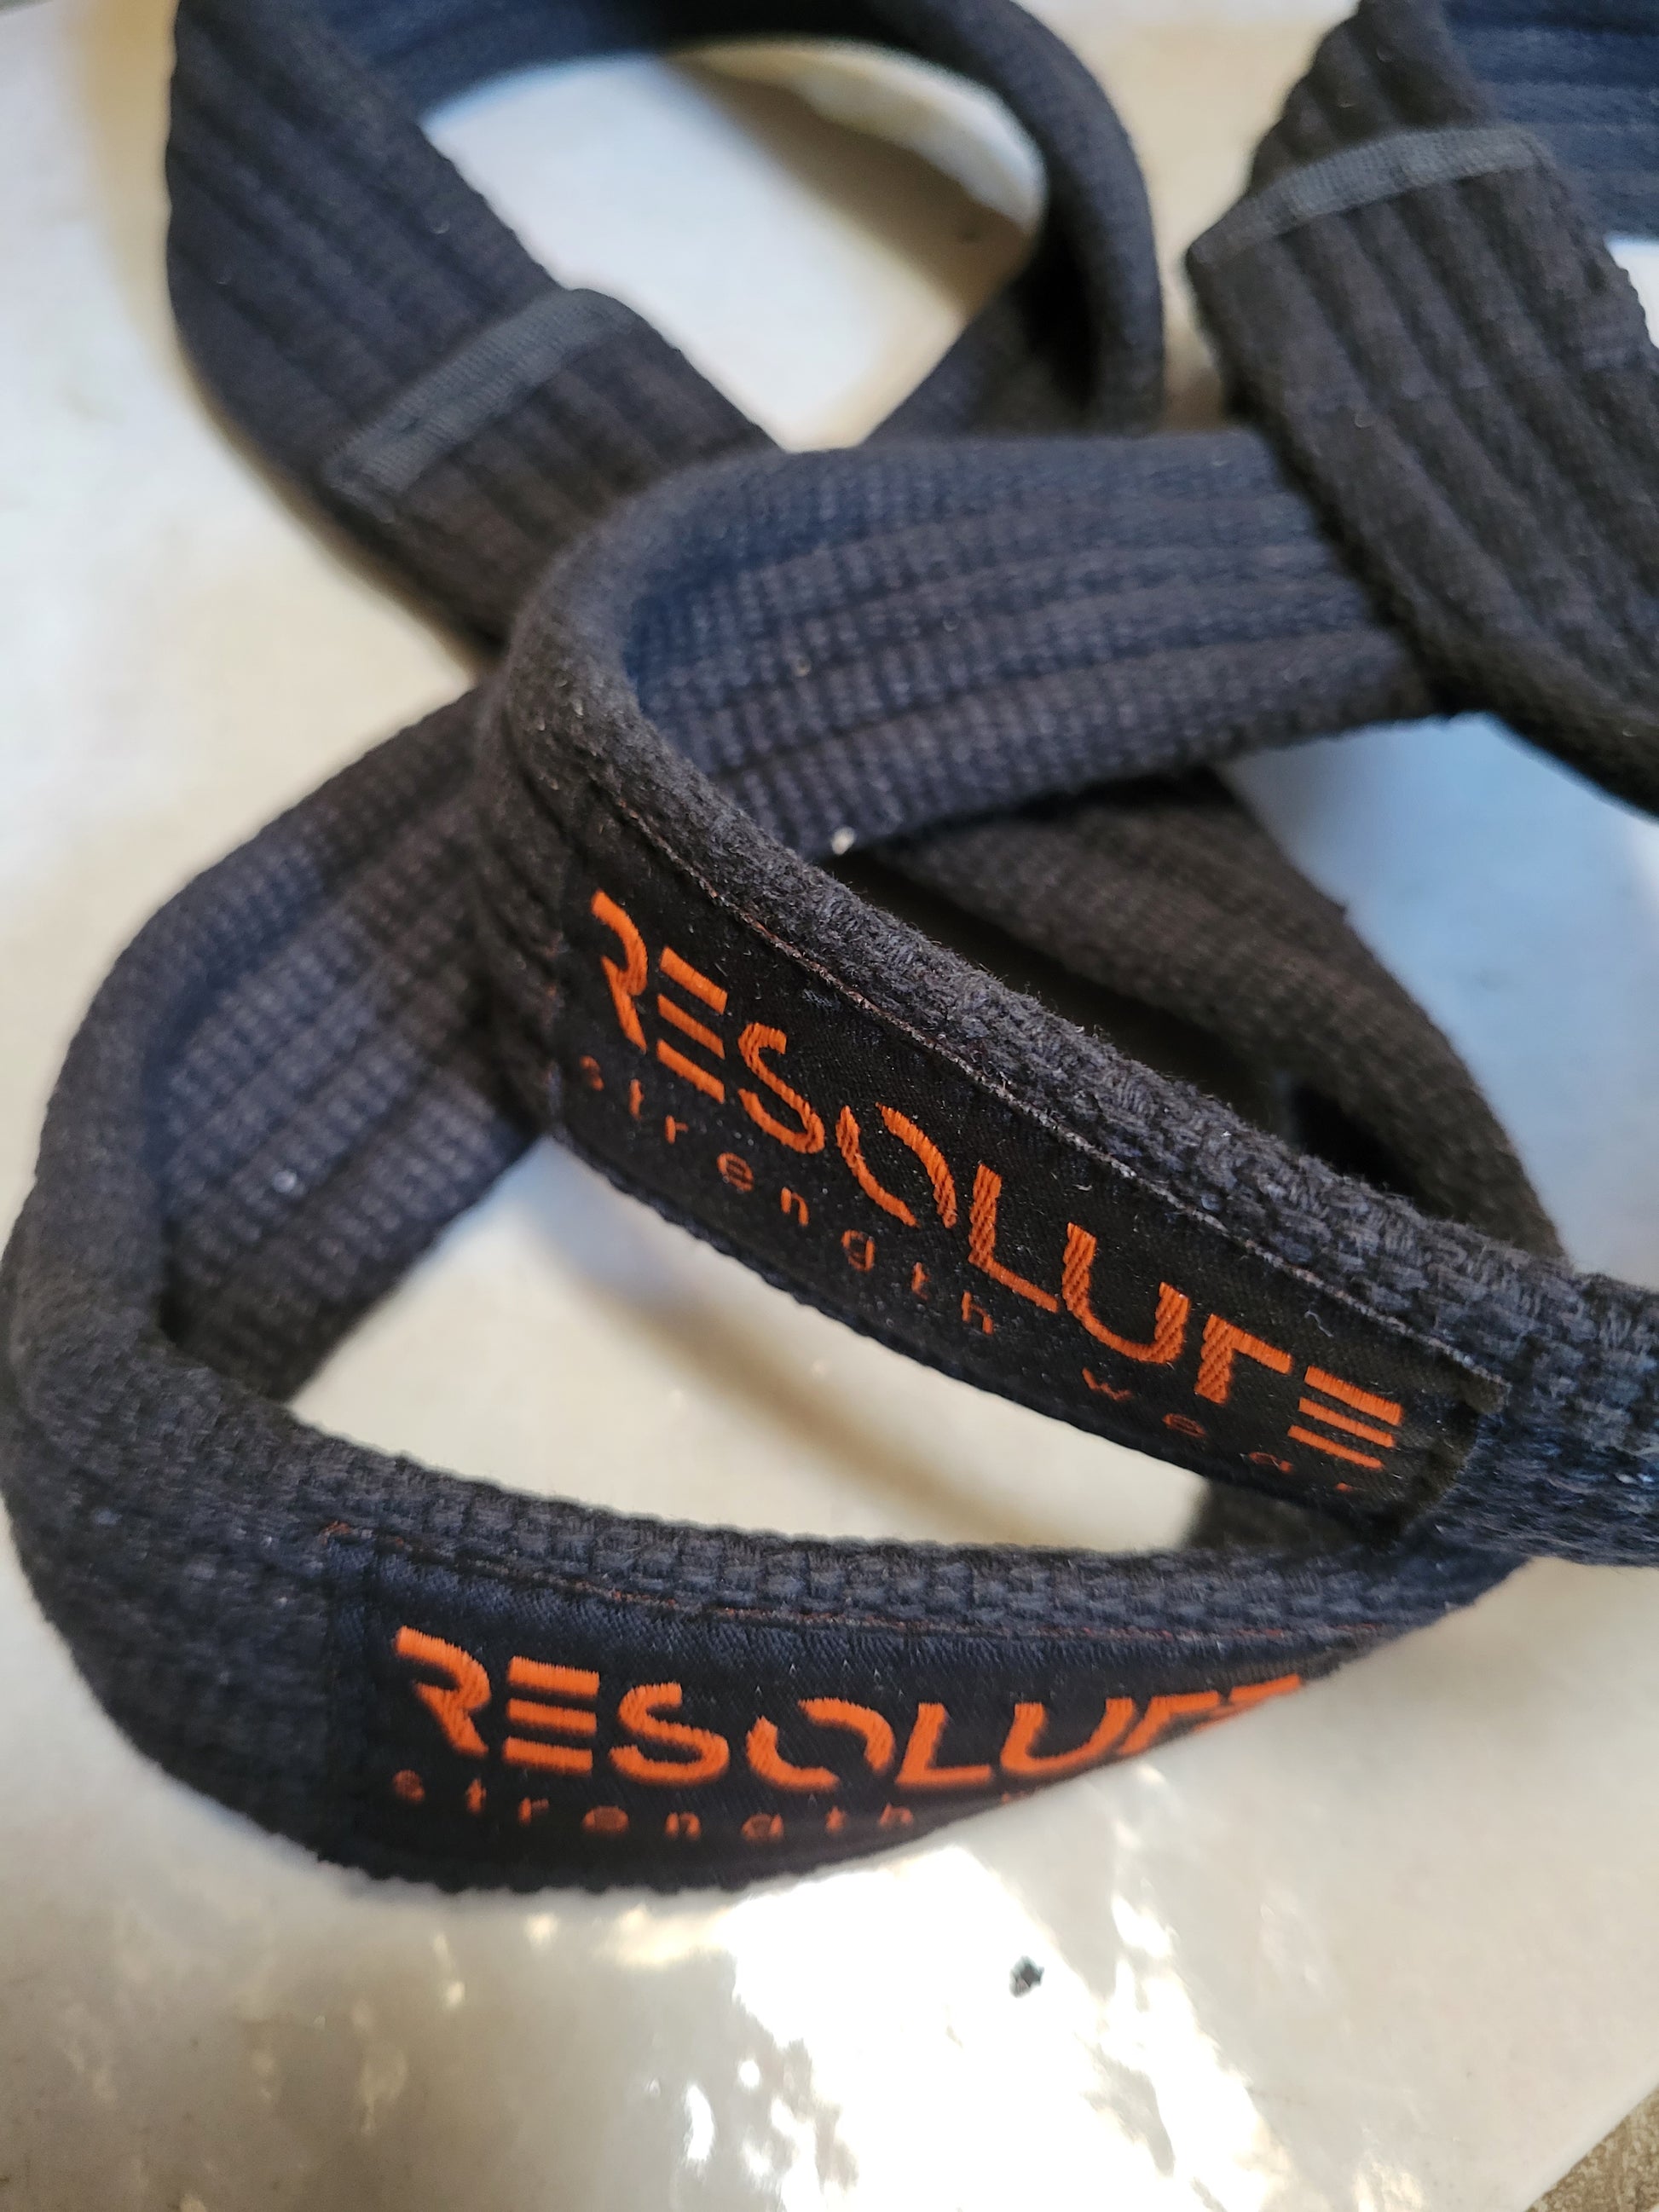 12" Figure 8 straps - Resolute Strength Wear